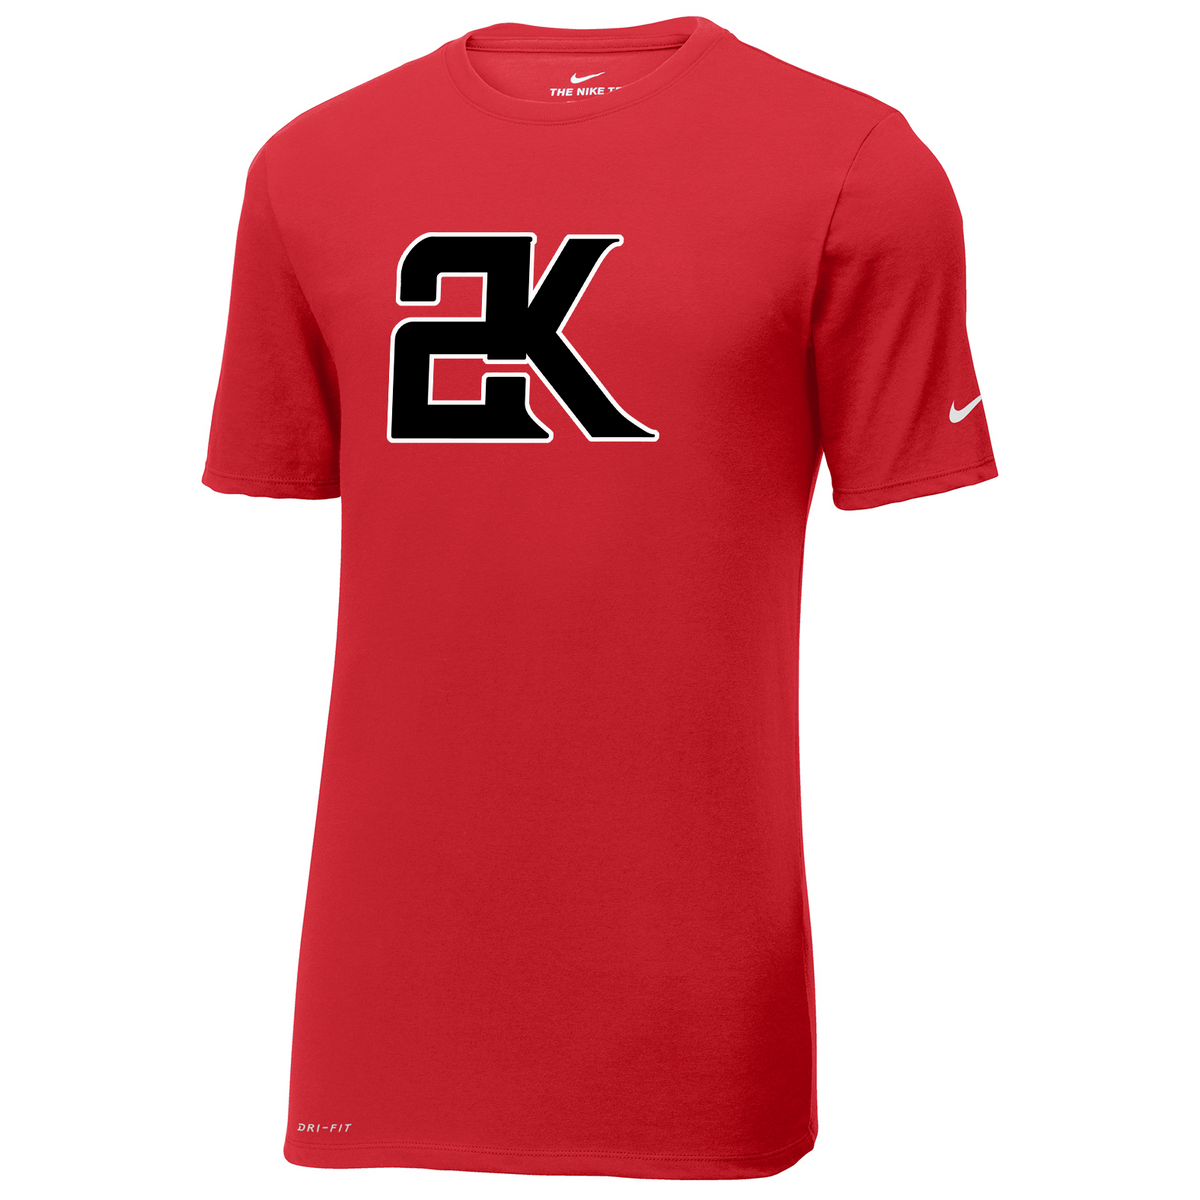 2K Softball Nike Dri-FIT Tee